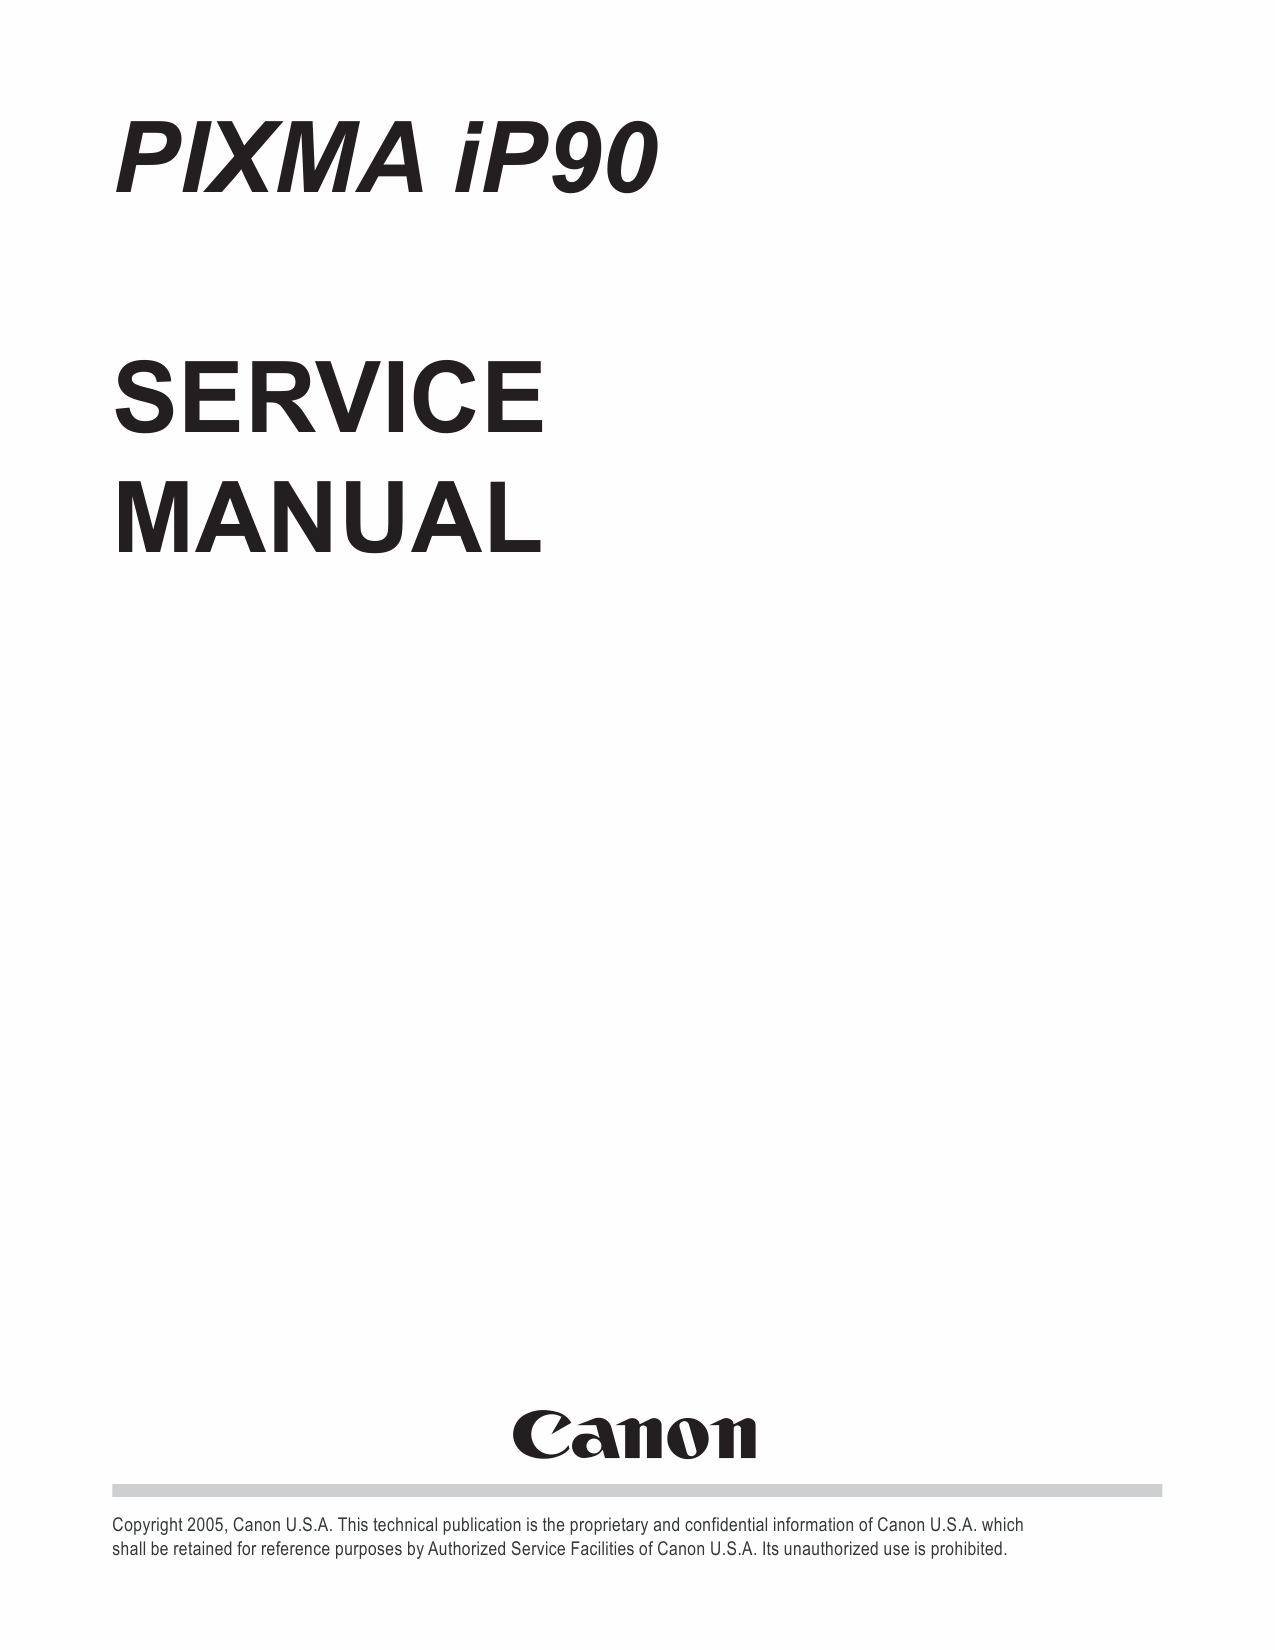 Canon PIXMA iP90 Service Manual-1